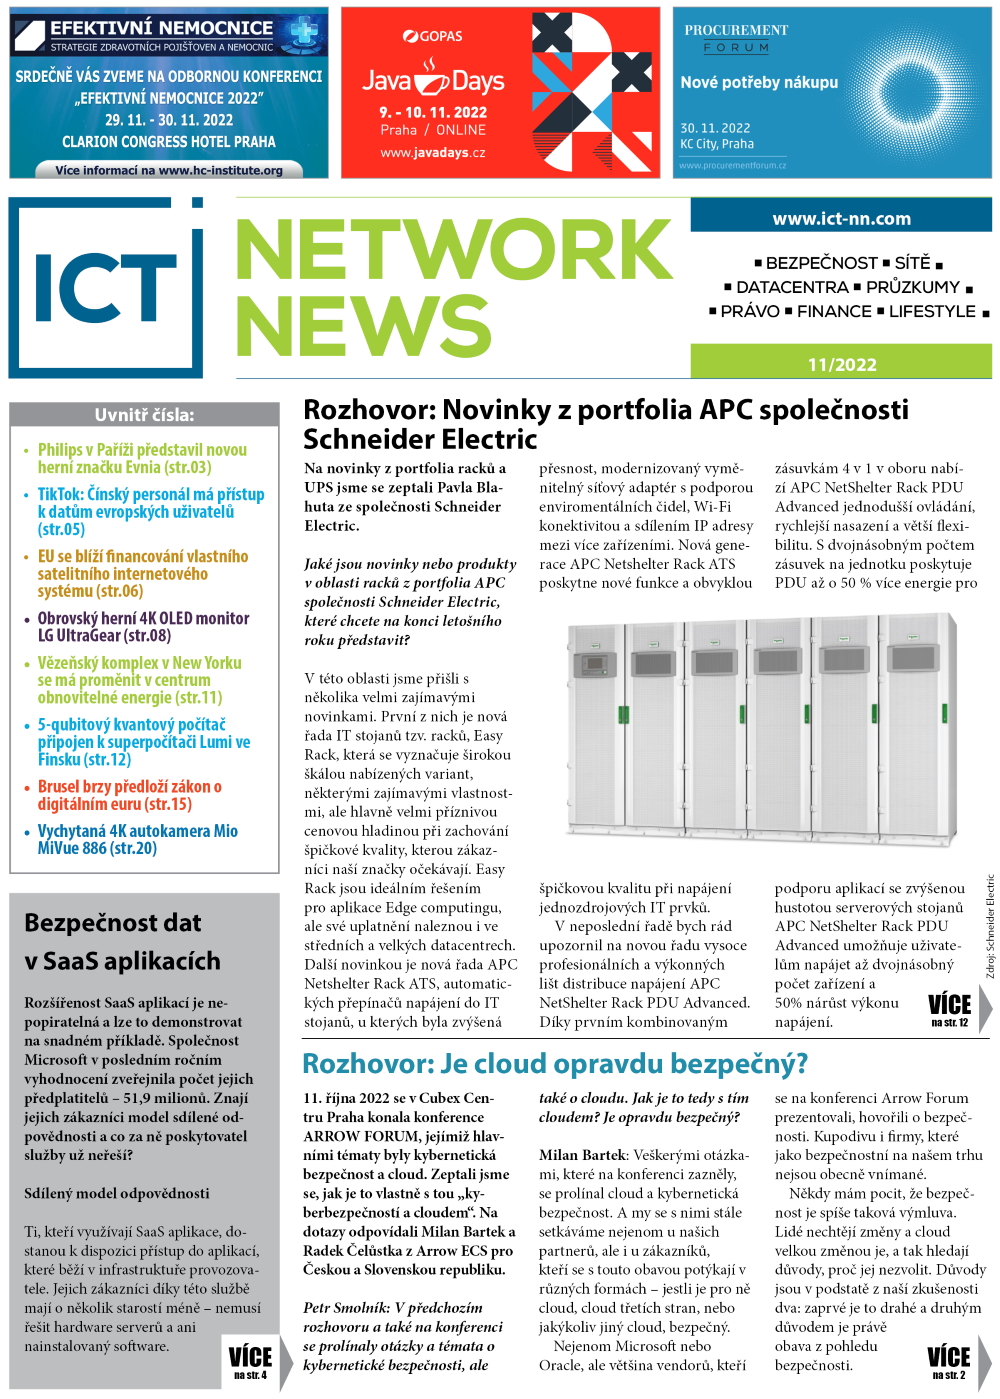 ICT NETWORK NEWS 11-2022